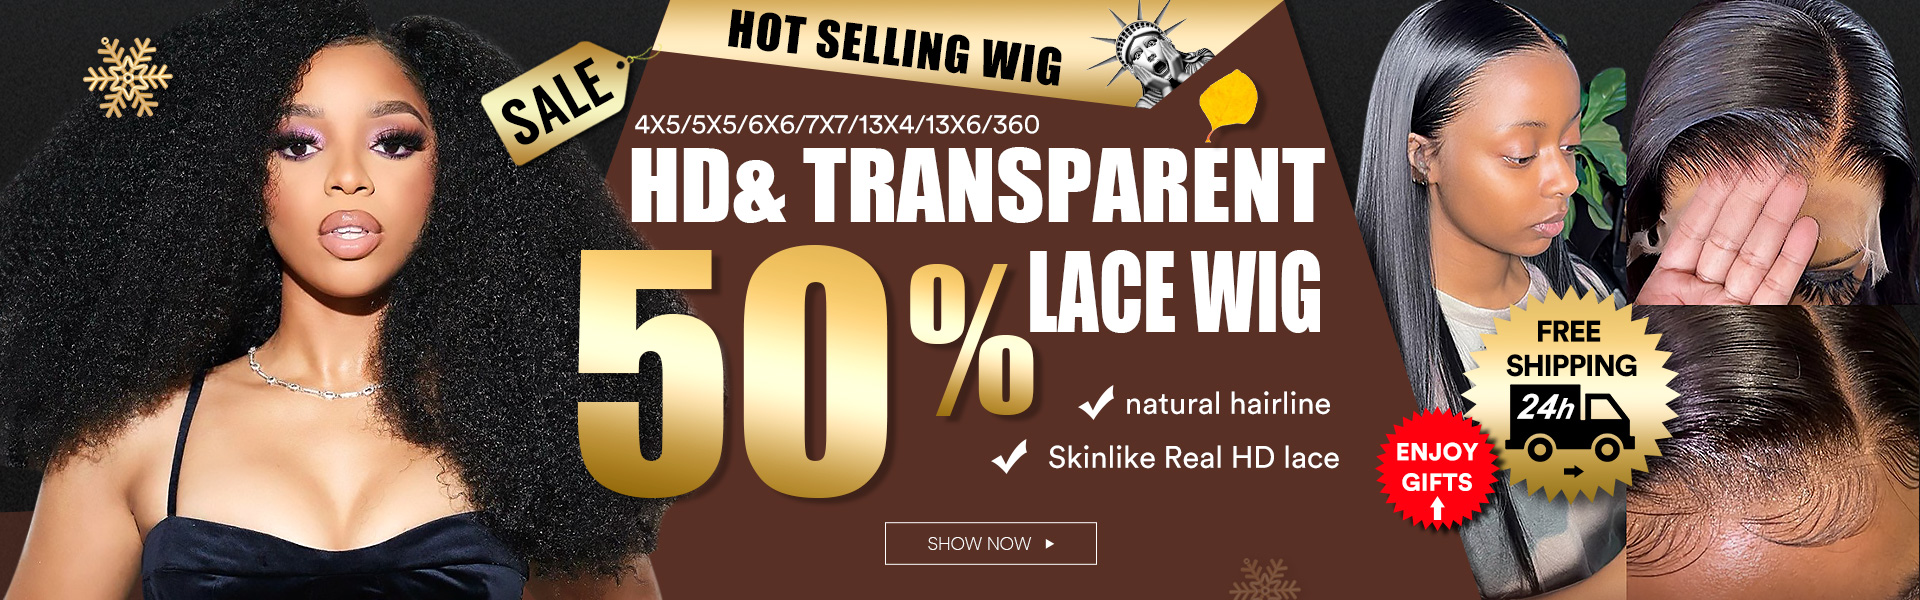 HD & Transaprent wig